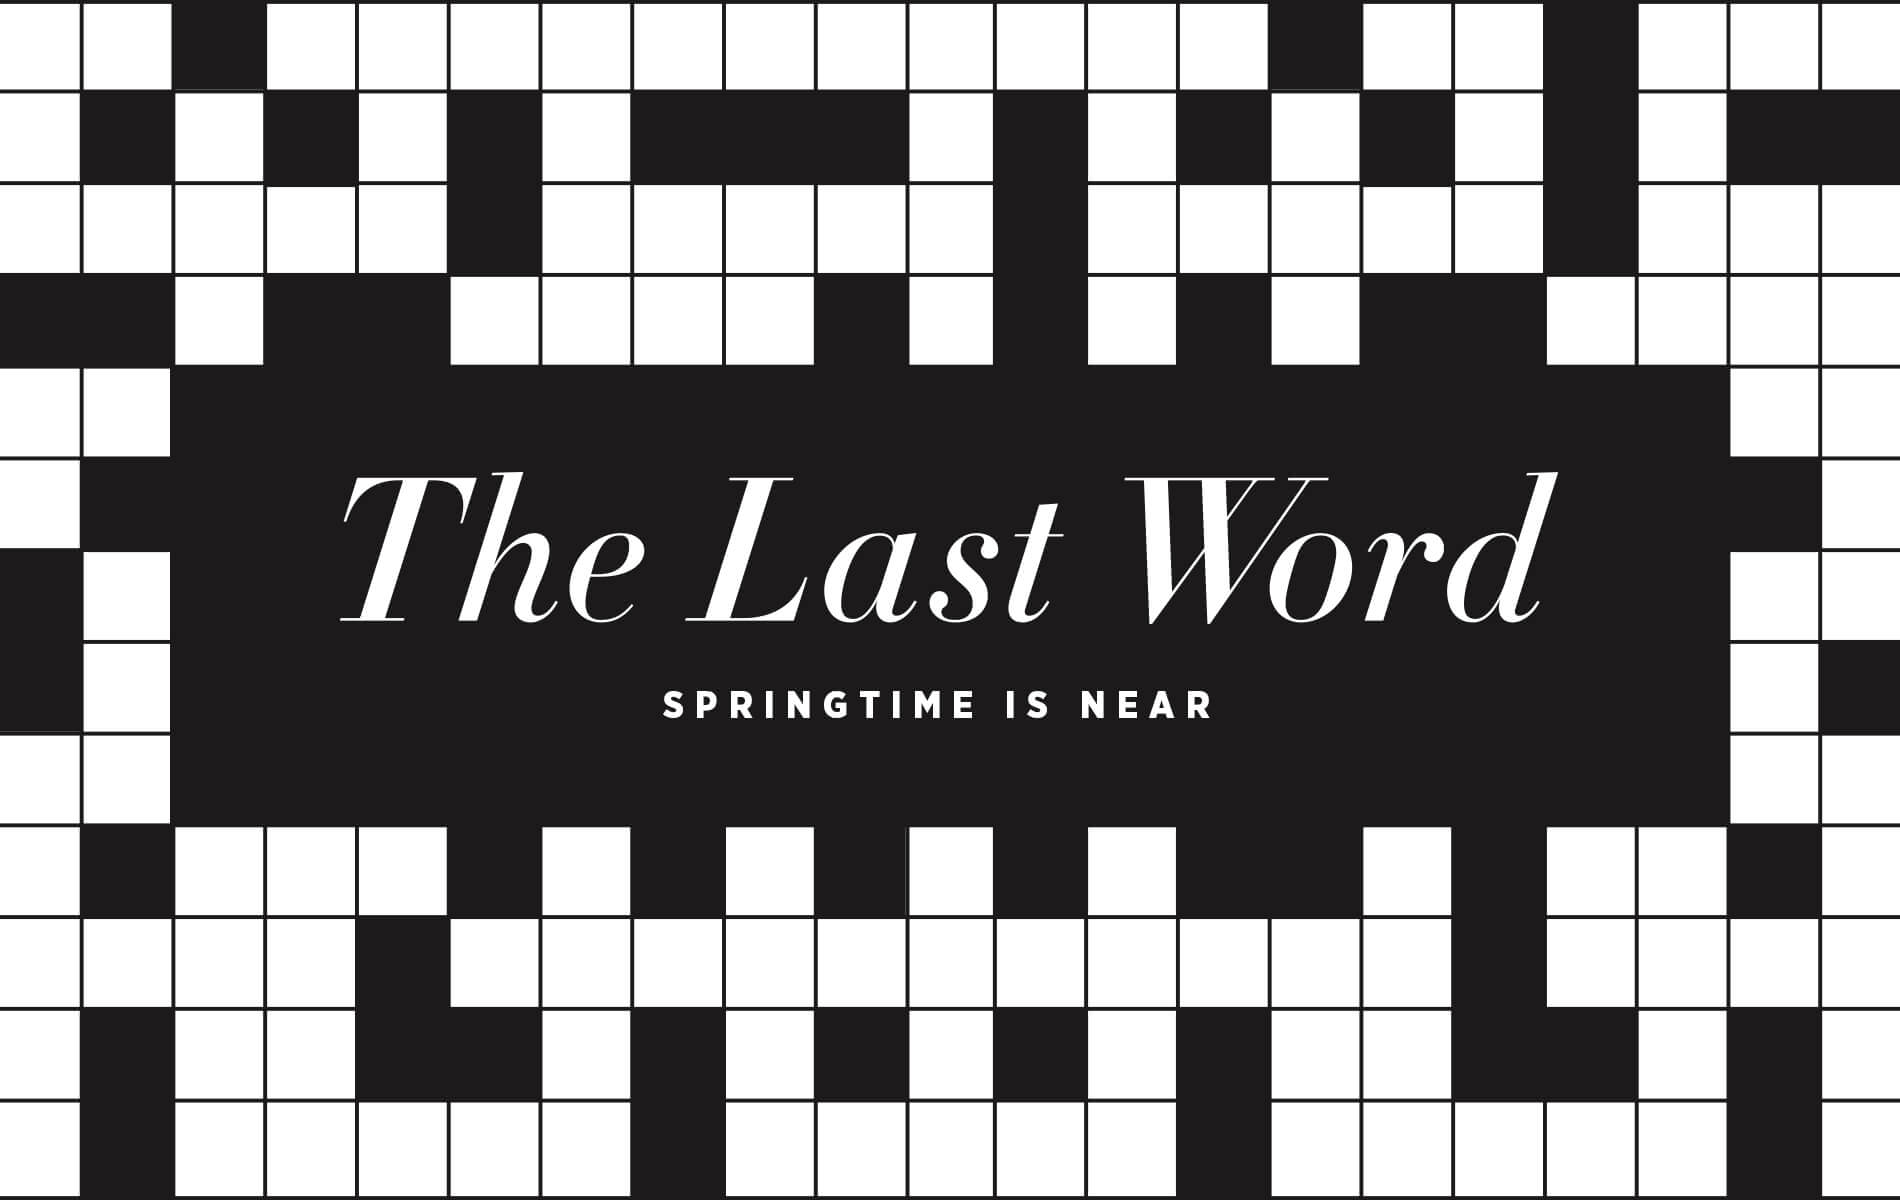 VIE Magazine The Last Word Springtime is Near, Crossword Puzzle